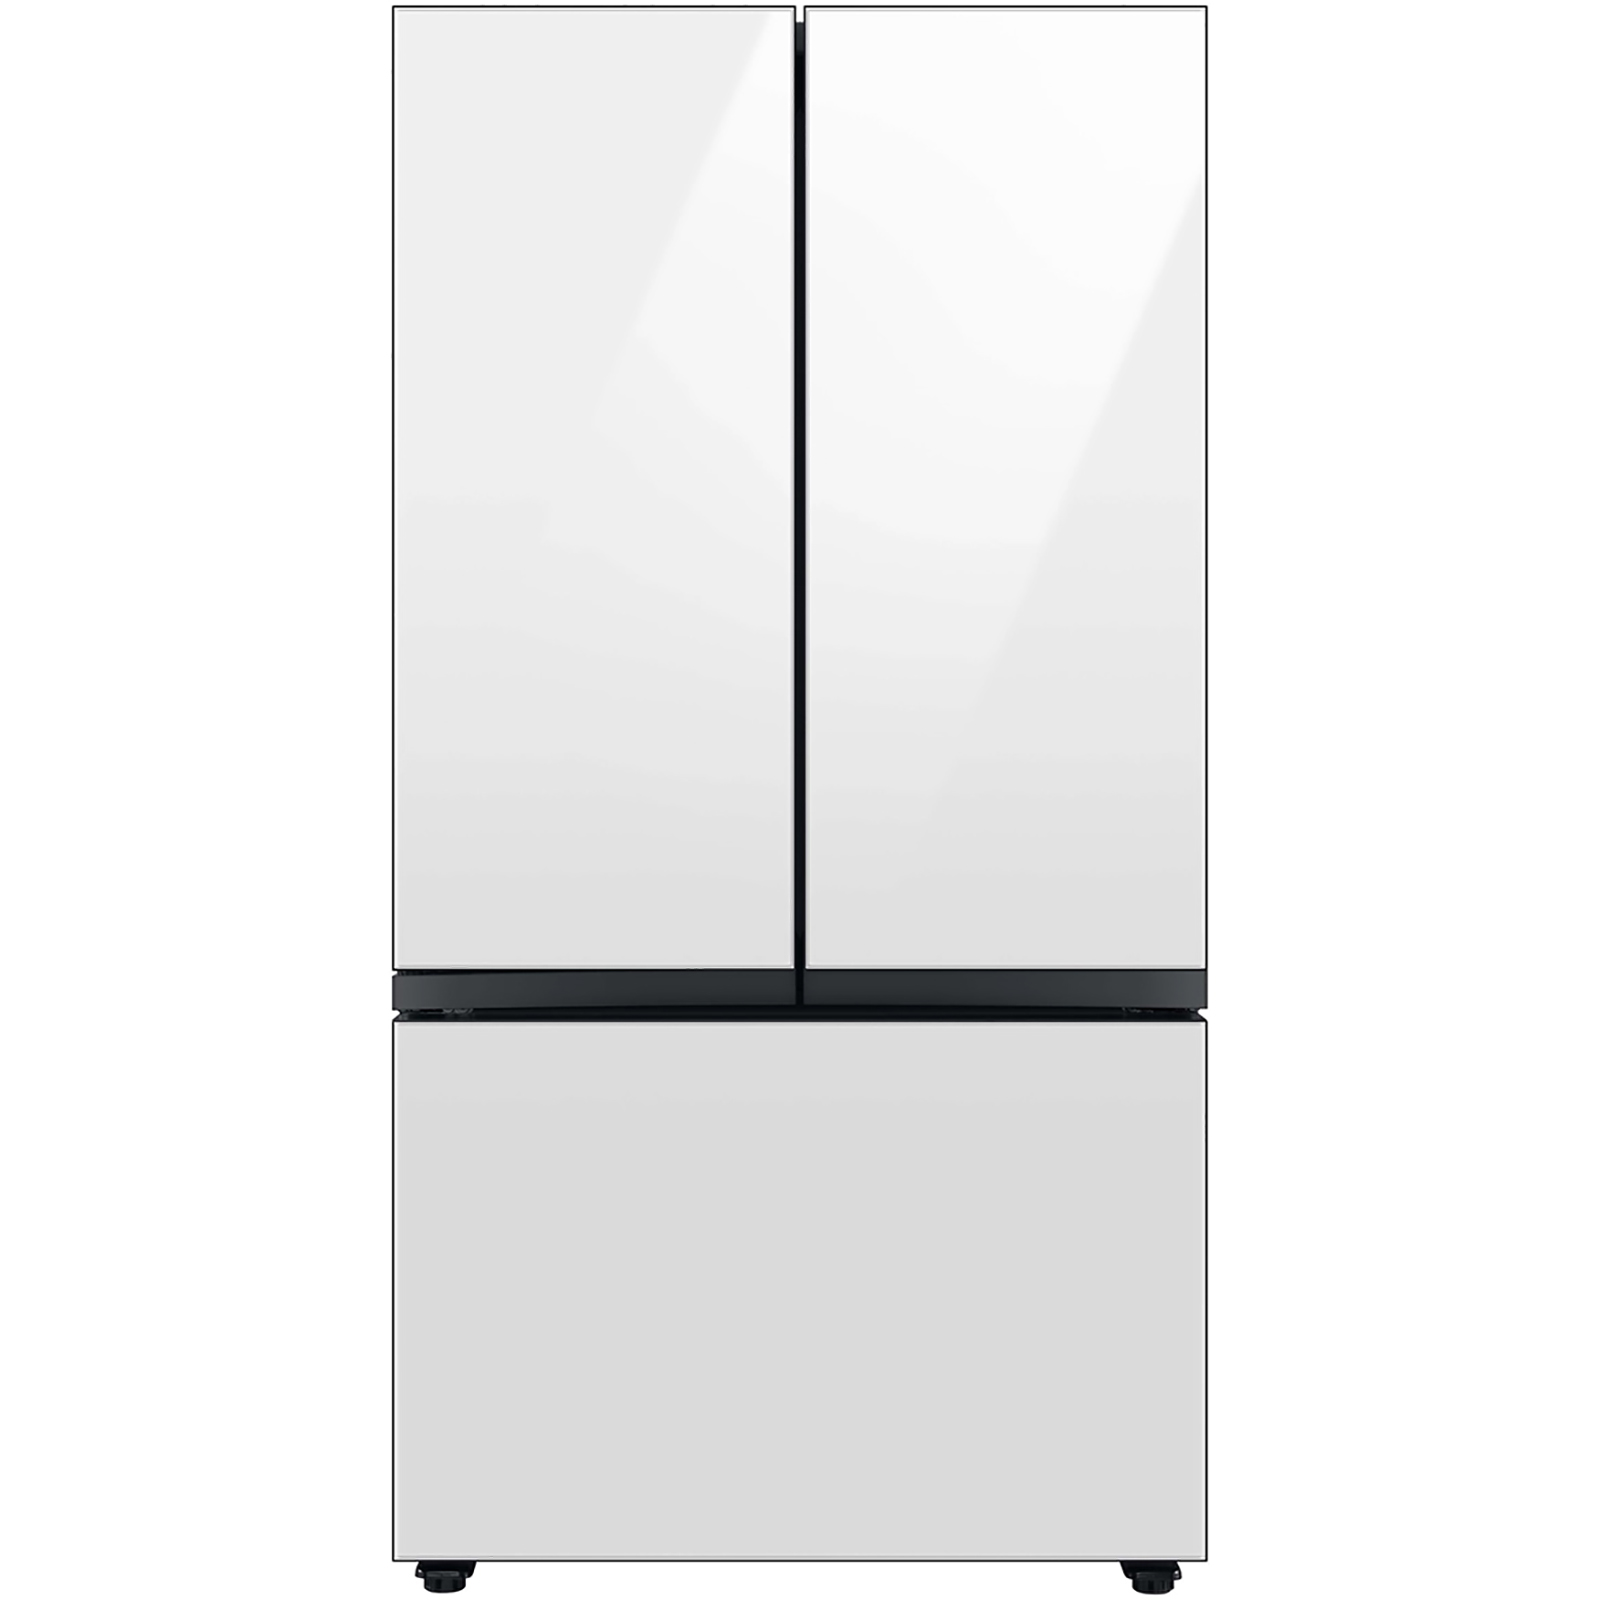 Samsung RF24BB660012AA 24 cu.ft. Bespoke 3-Door French Door Refrigerator with Beverage Center - White Glass